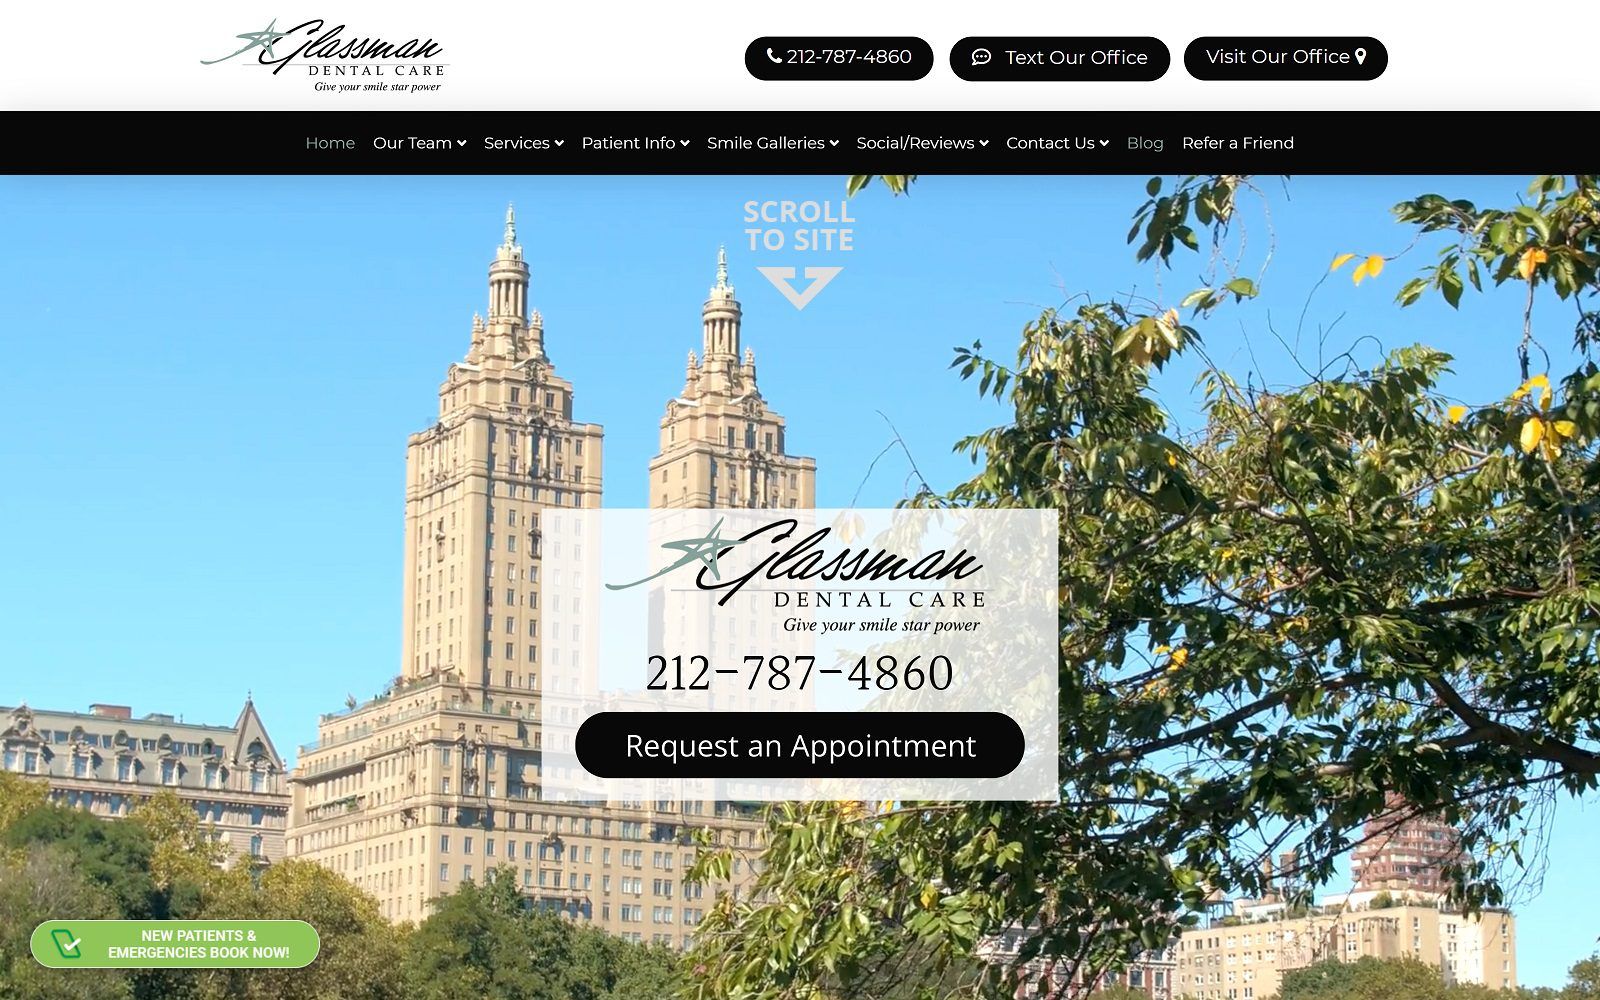 The screenshot of glassman dental care website